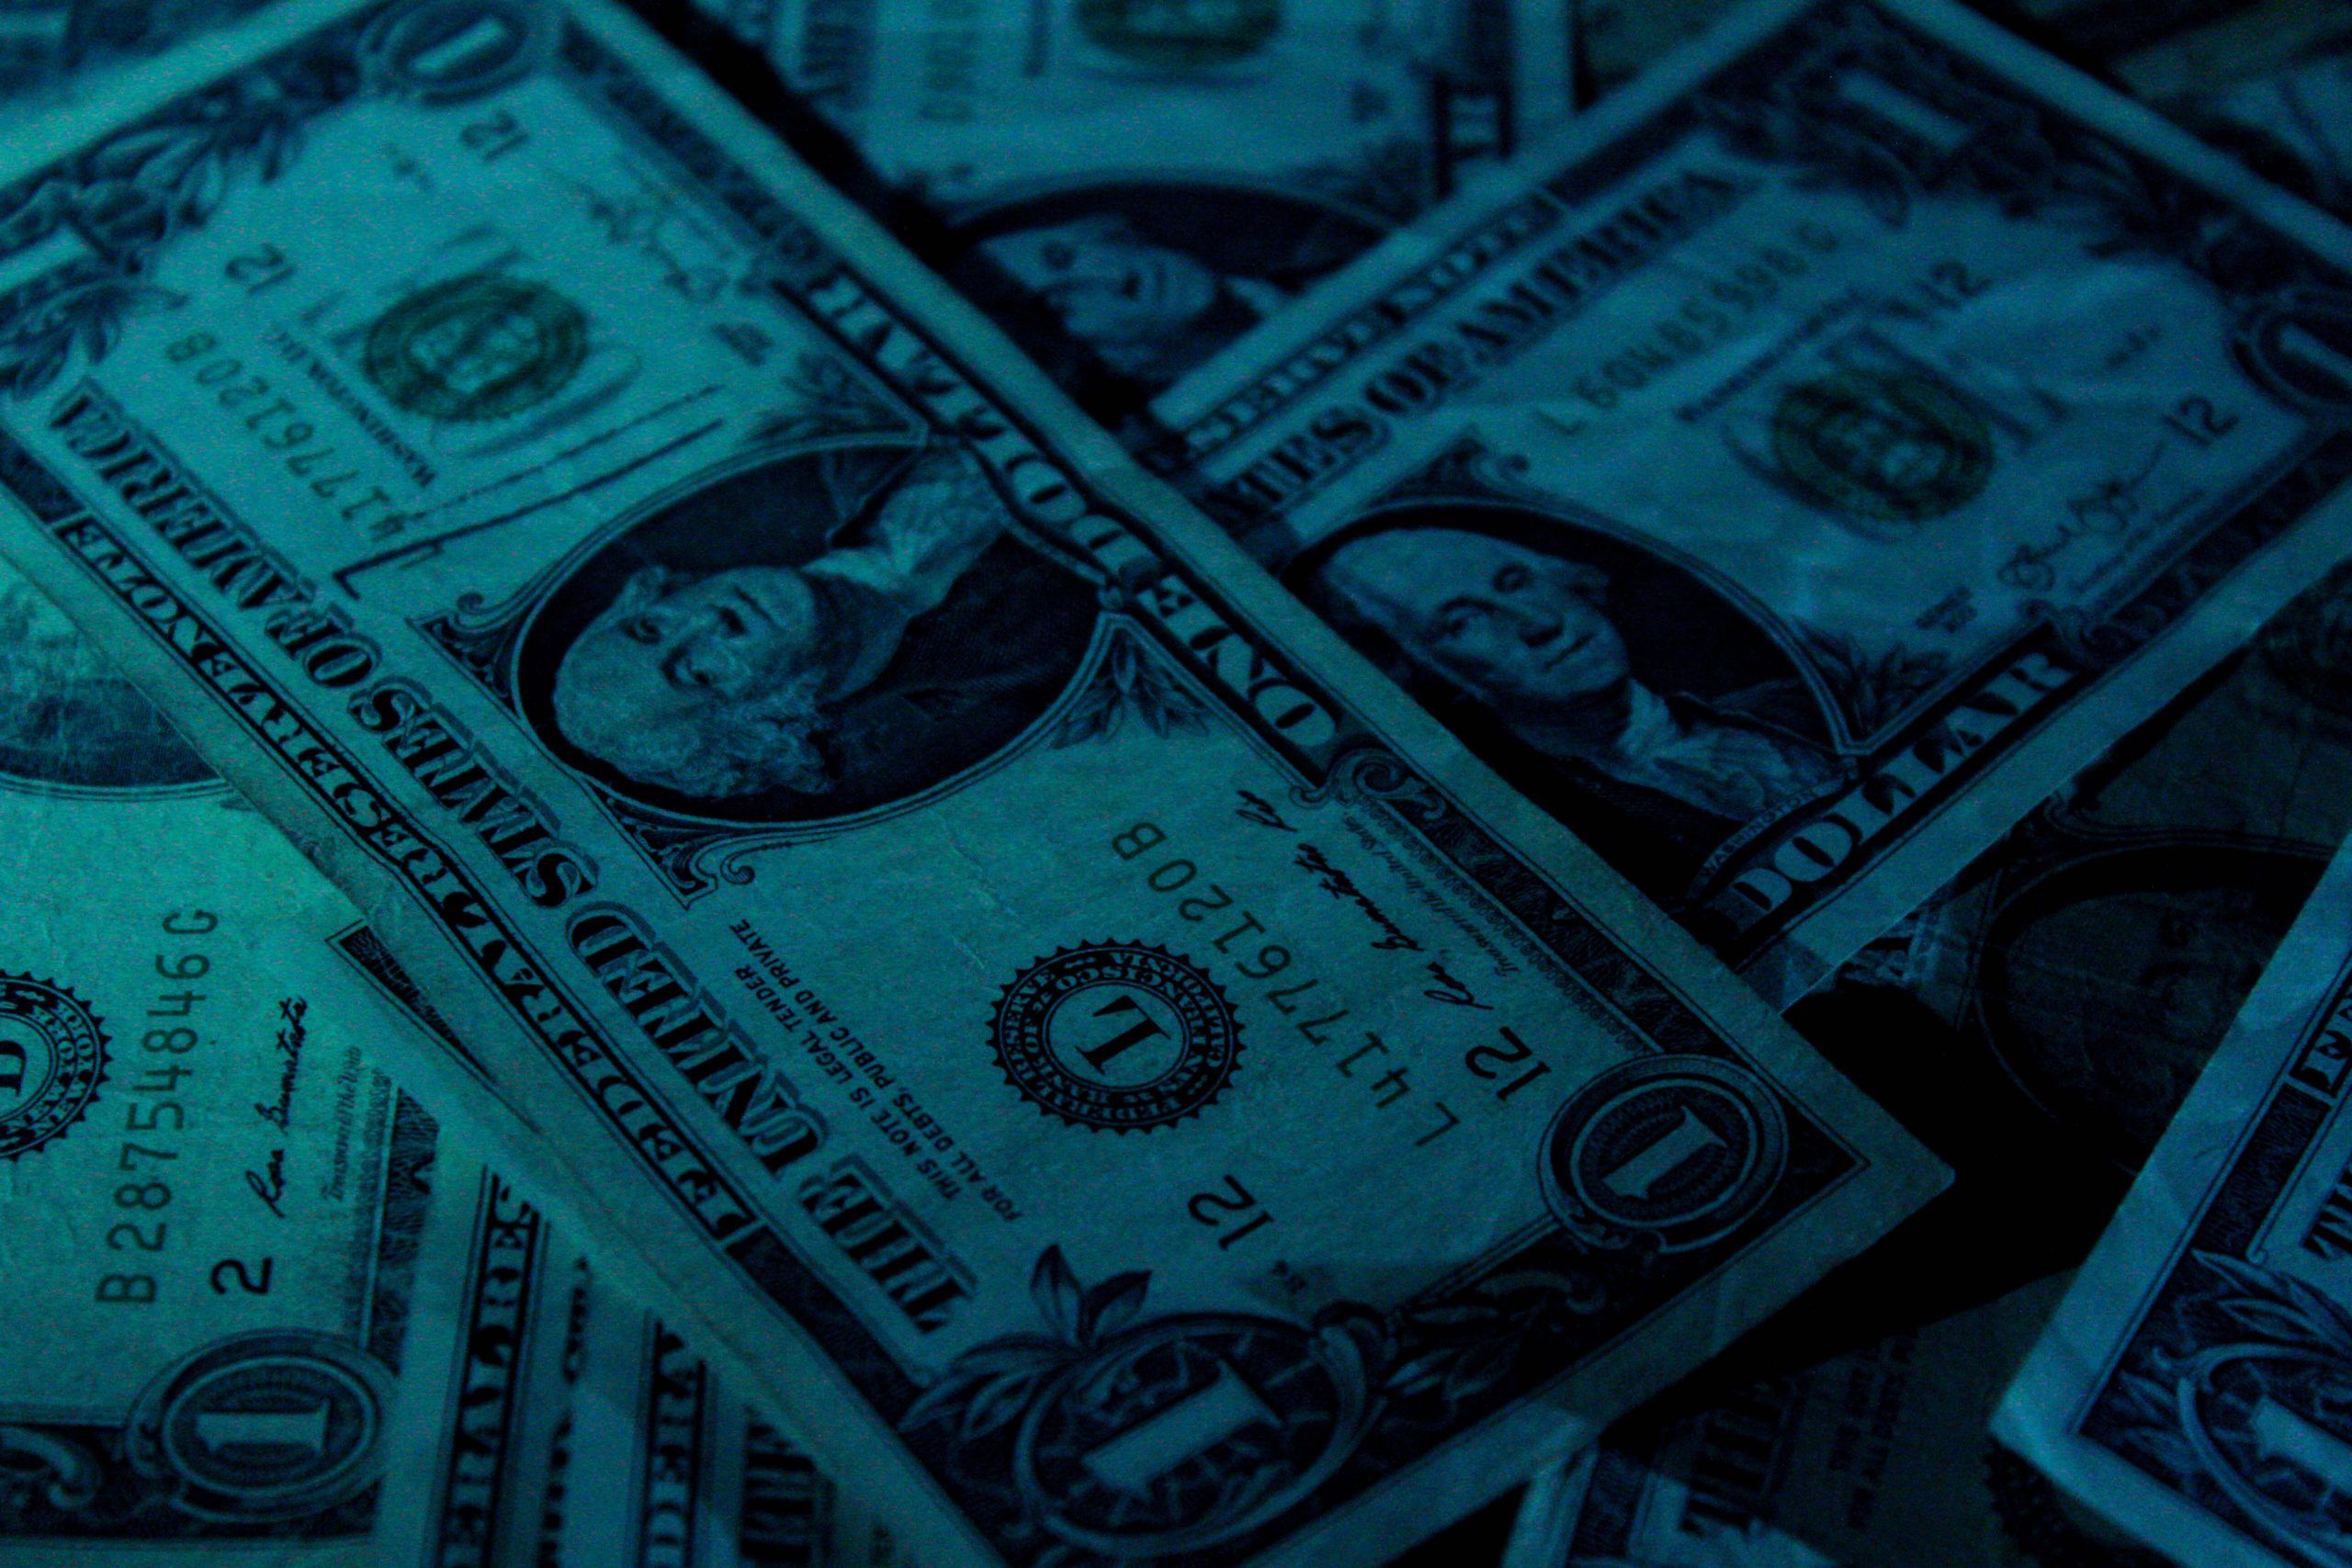 Photograph of US dollars